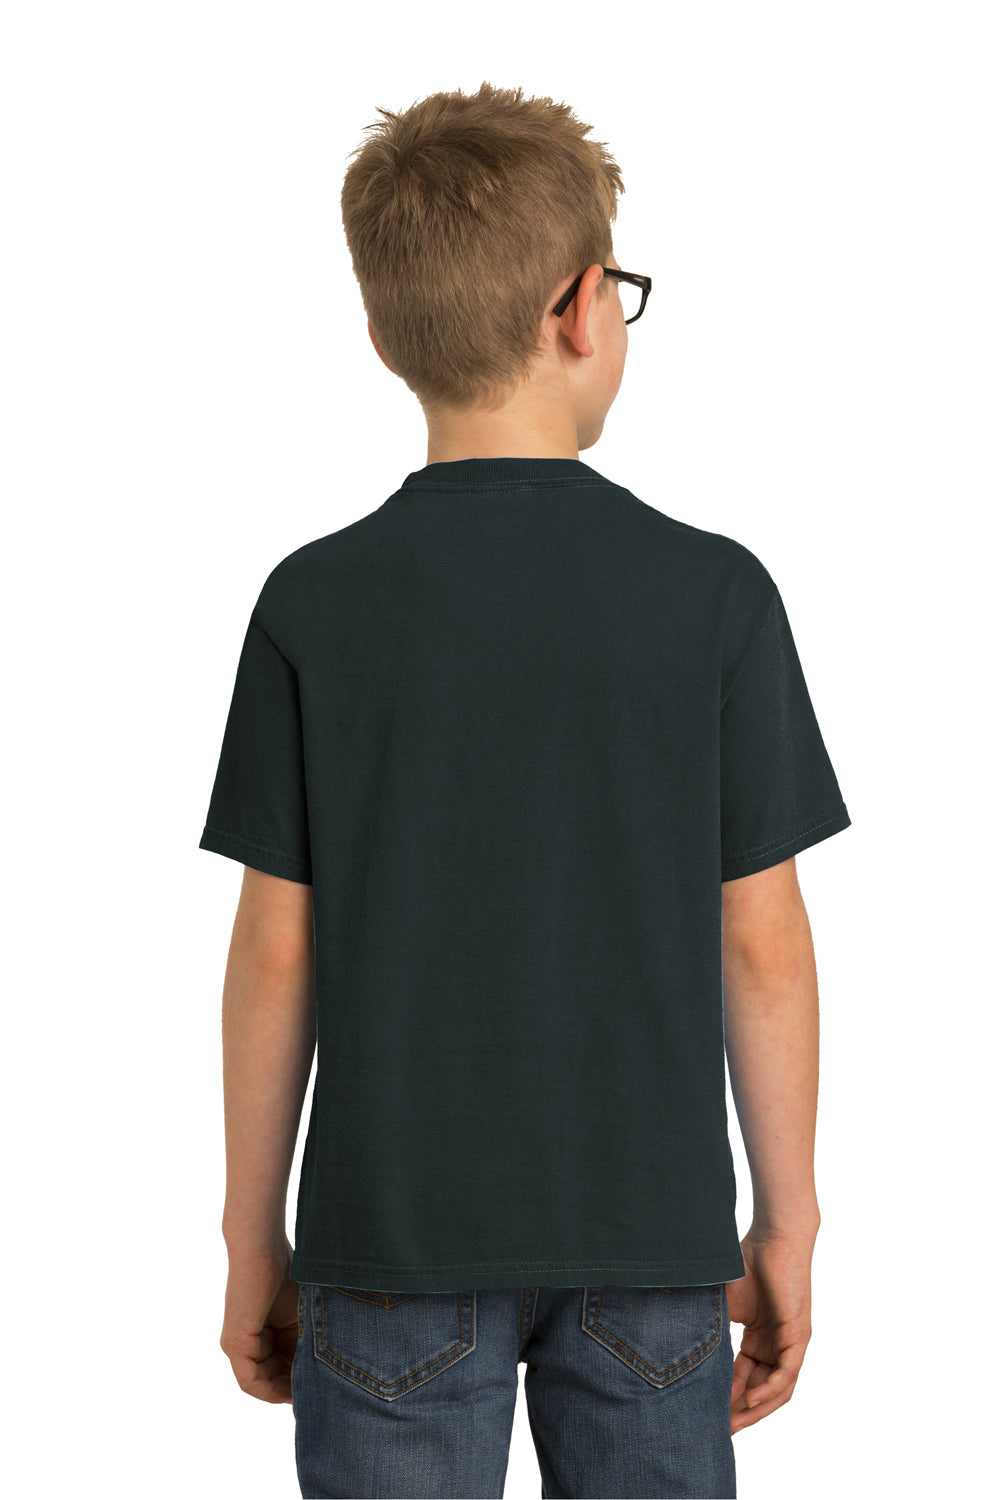 Port & Company PC099Y Youth Beach Wash Short Sleeve Crewneck T-Shirt Black Back